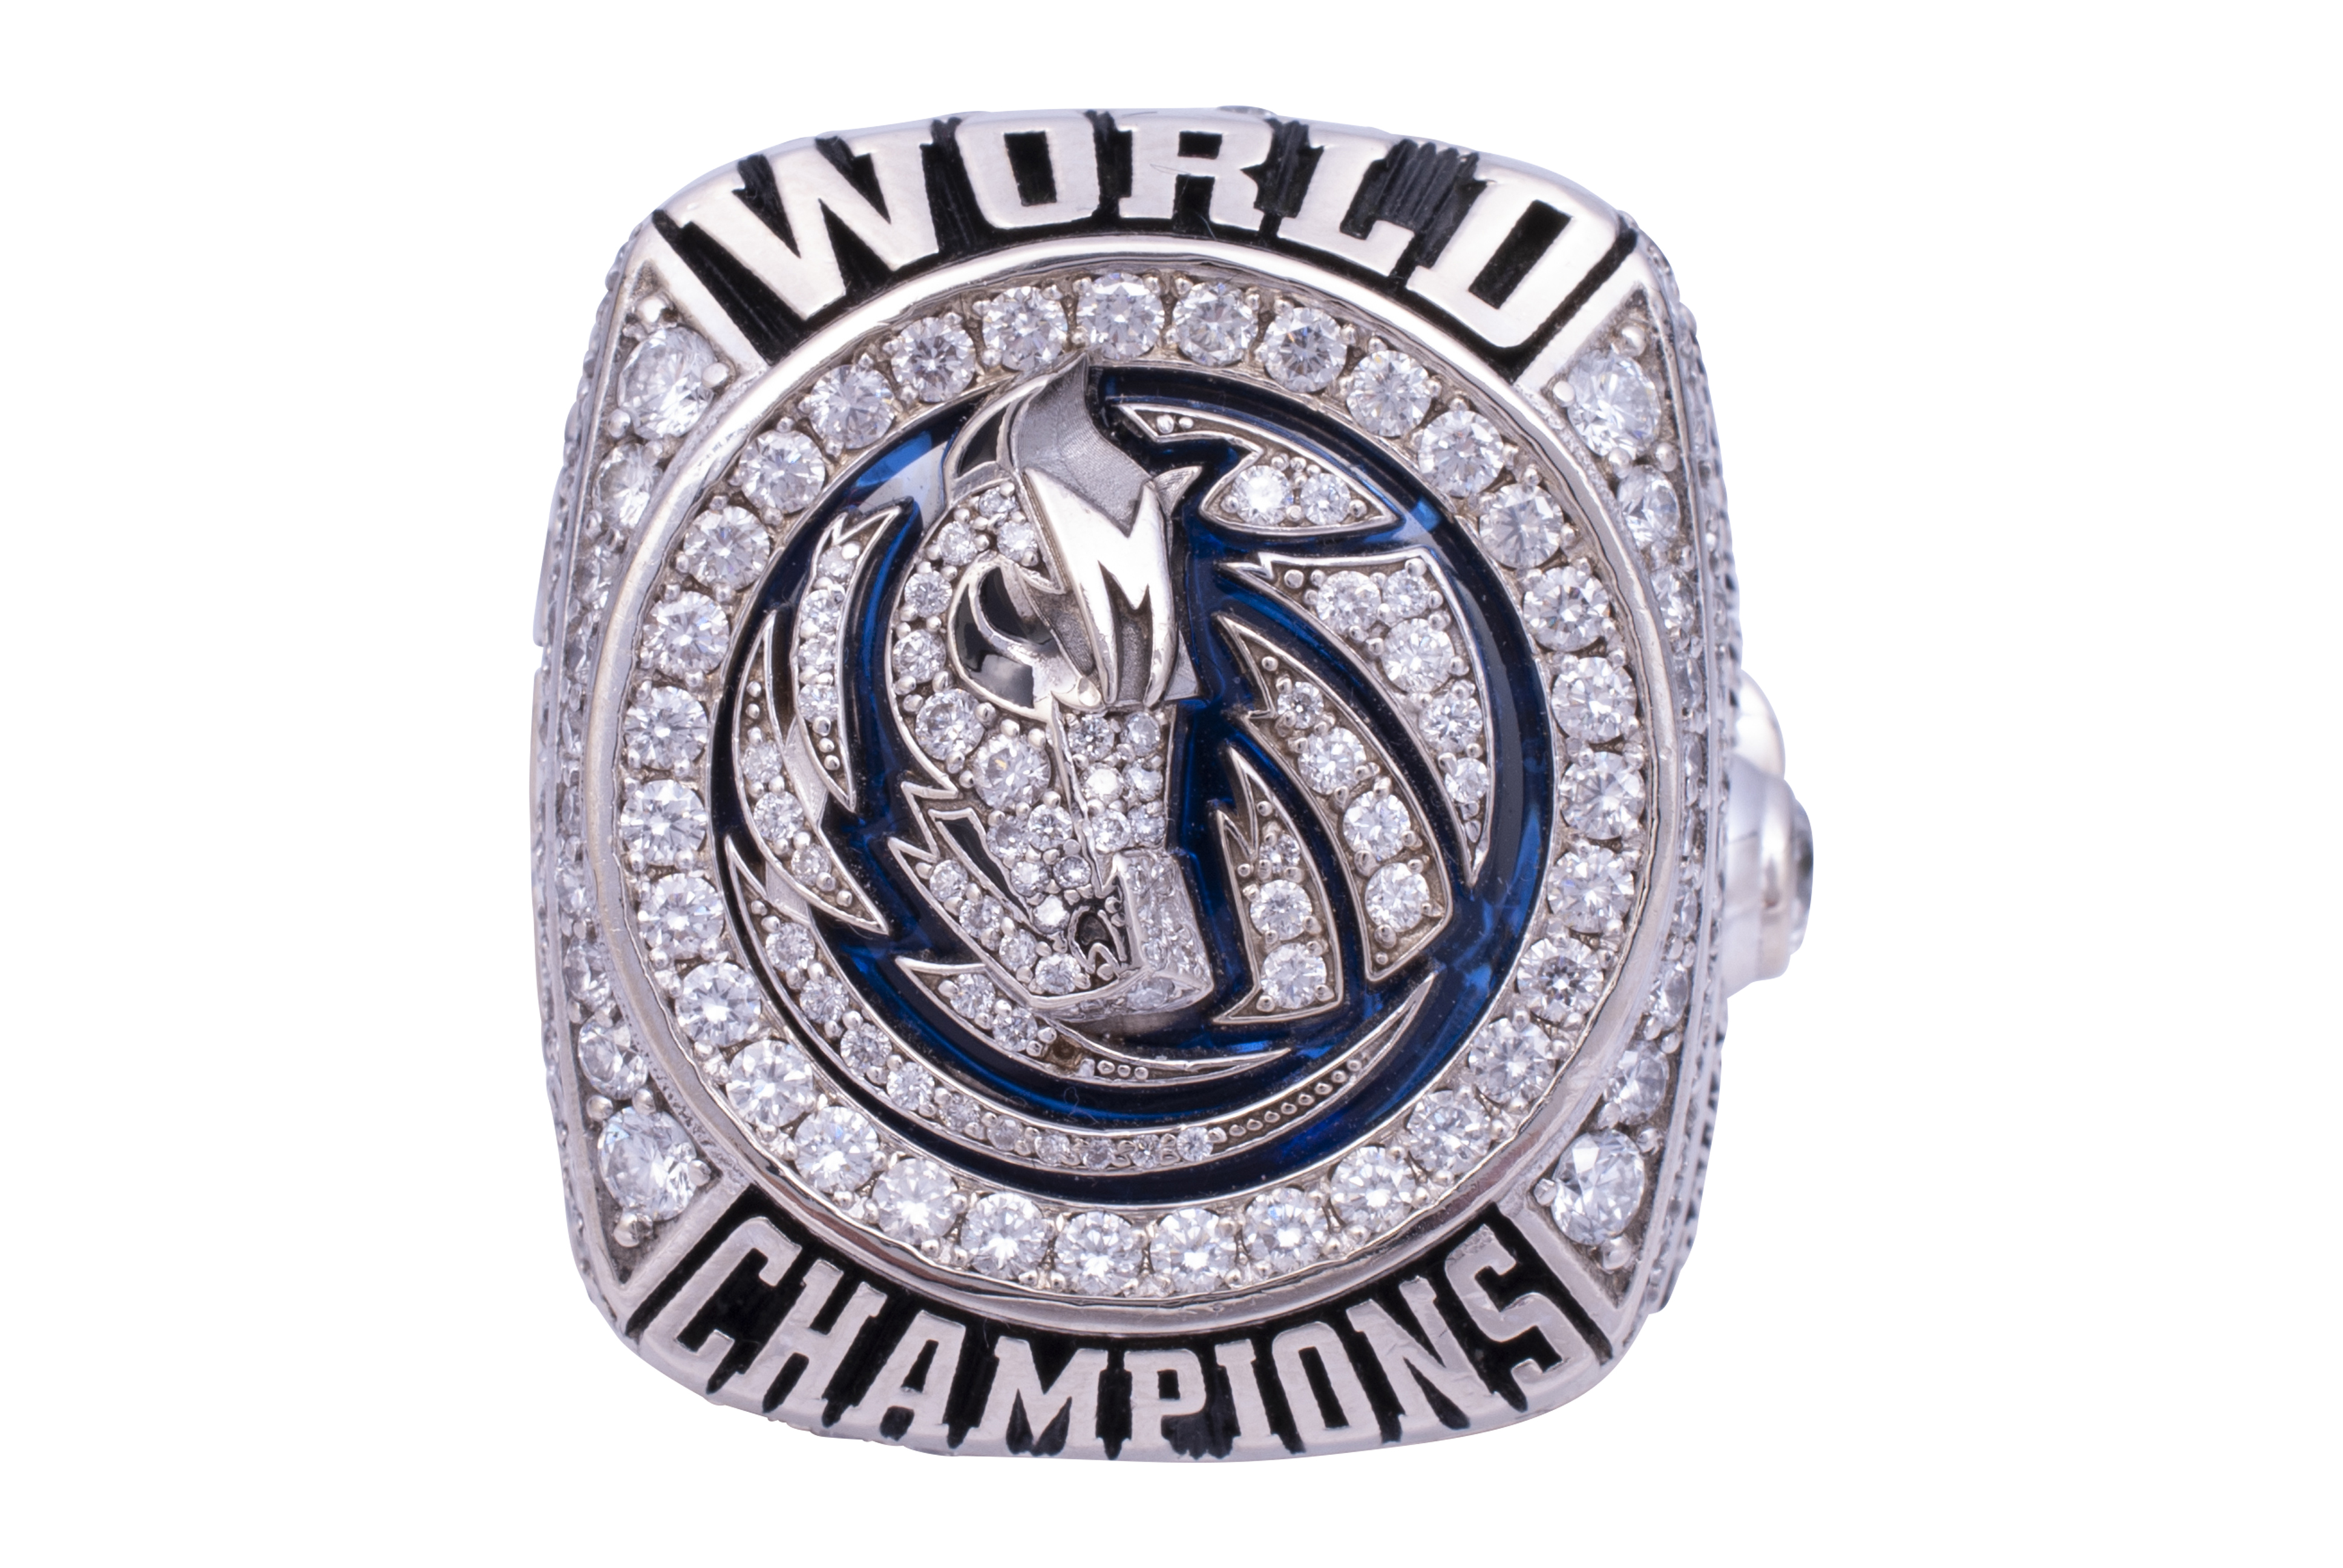 Dallas Maverick 2011 NBA Championship Ring